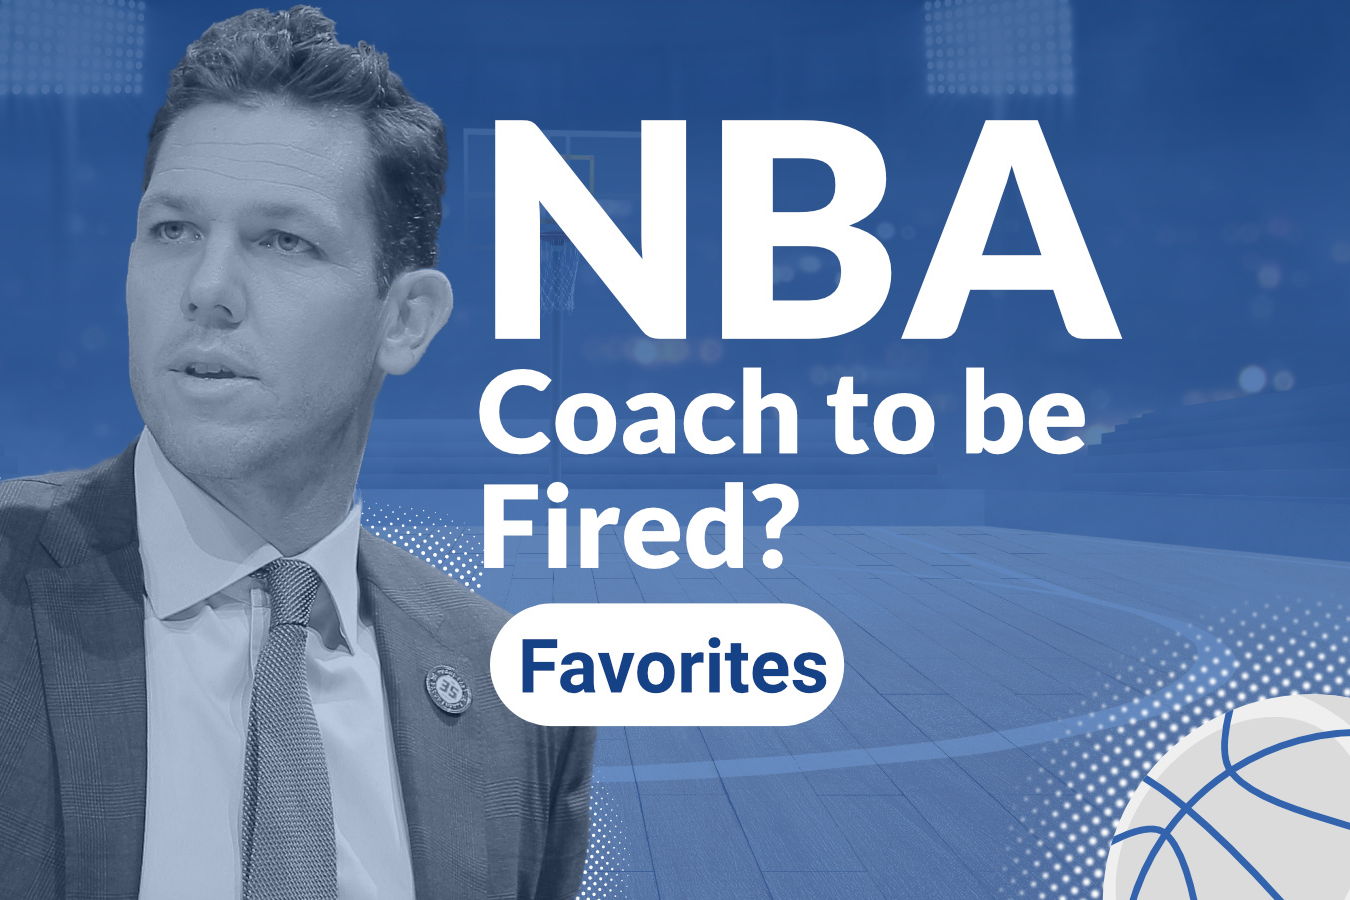 Next NBA Coach to Be Fired: Kings' Walton The Favorite